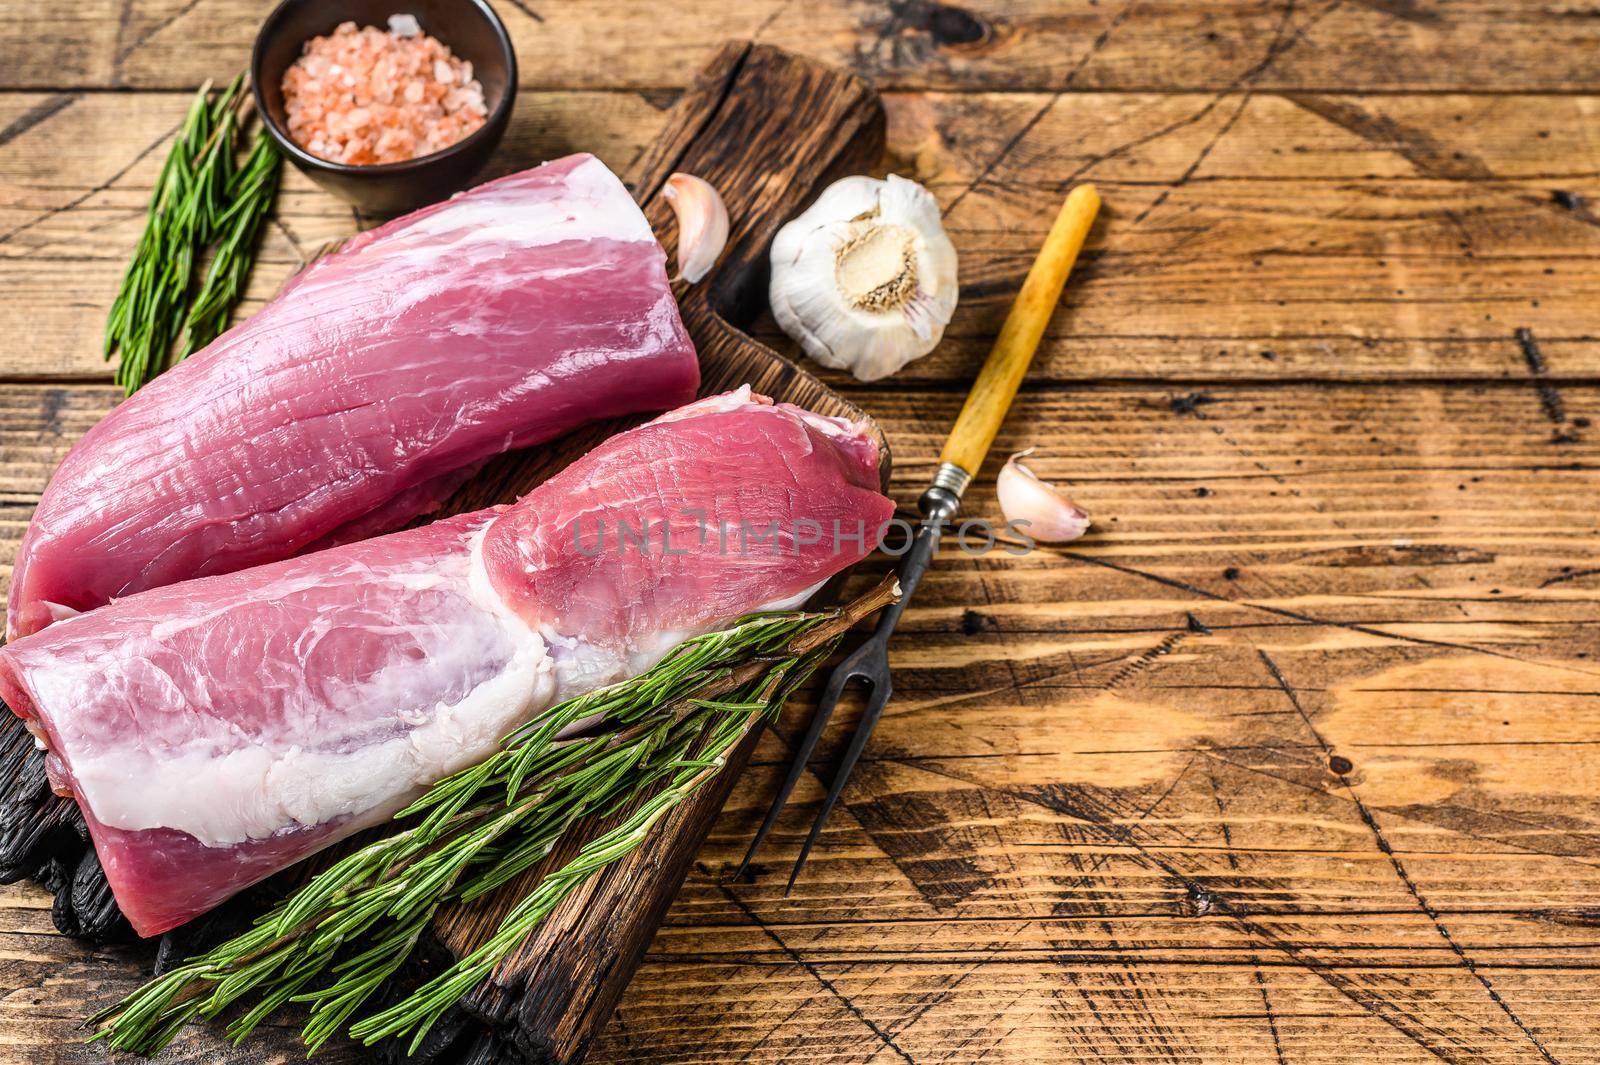 Raw cut pork tenderloin fillet meat. wooden background. Top view. Copy space.